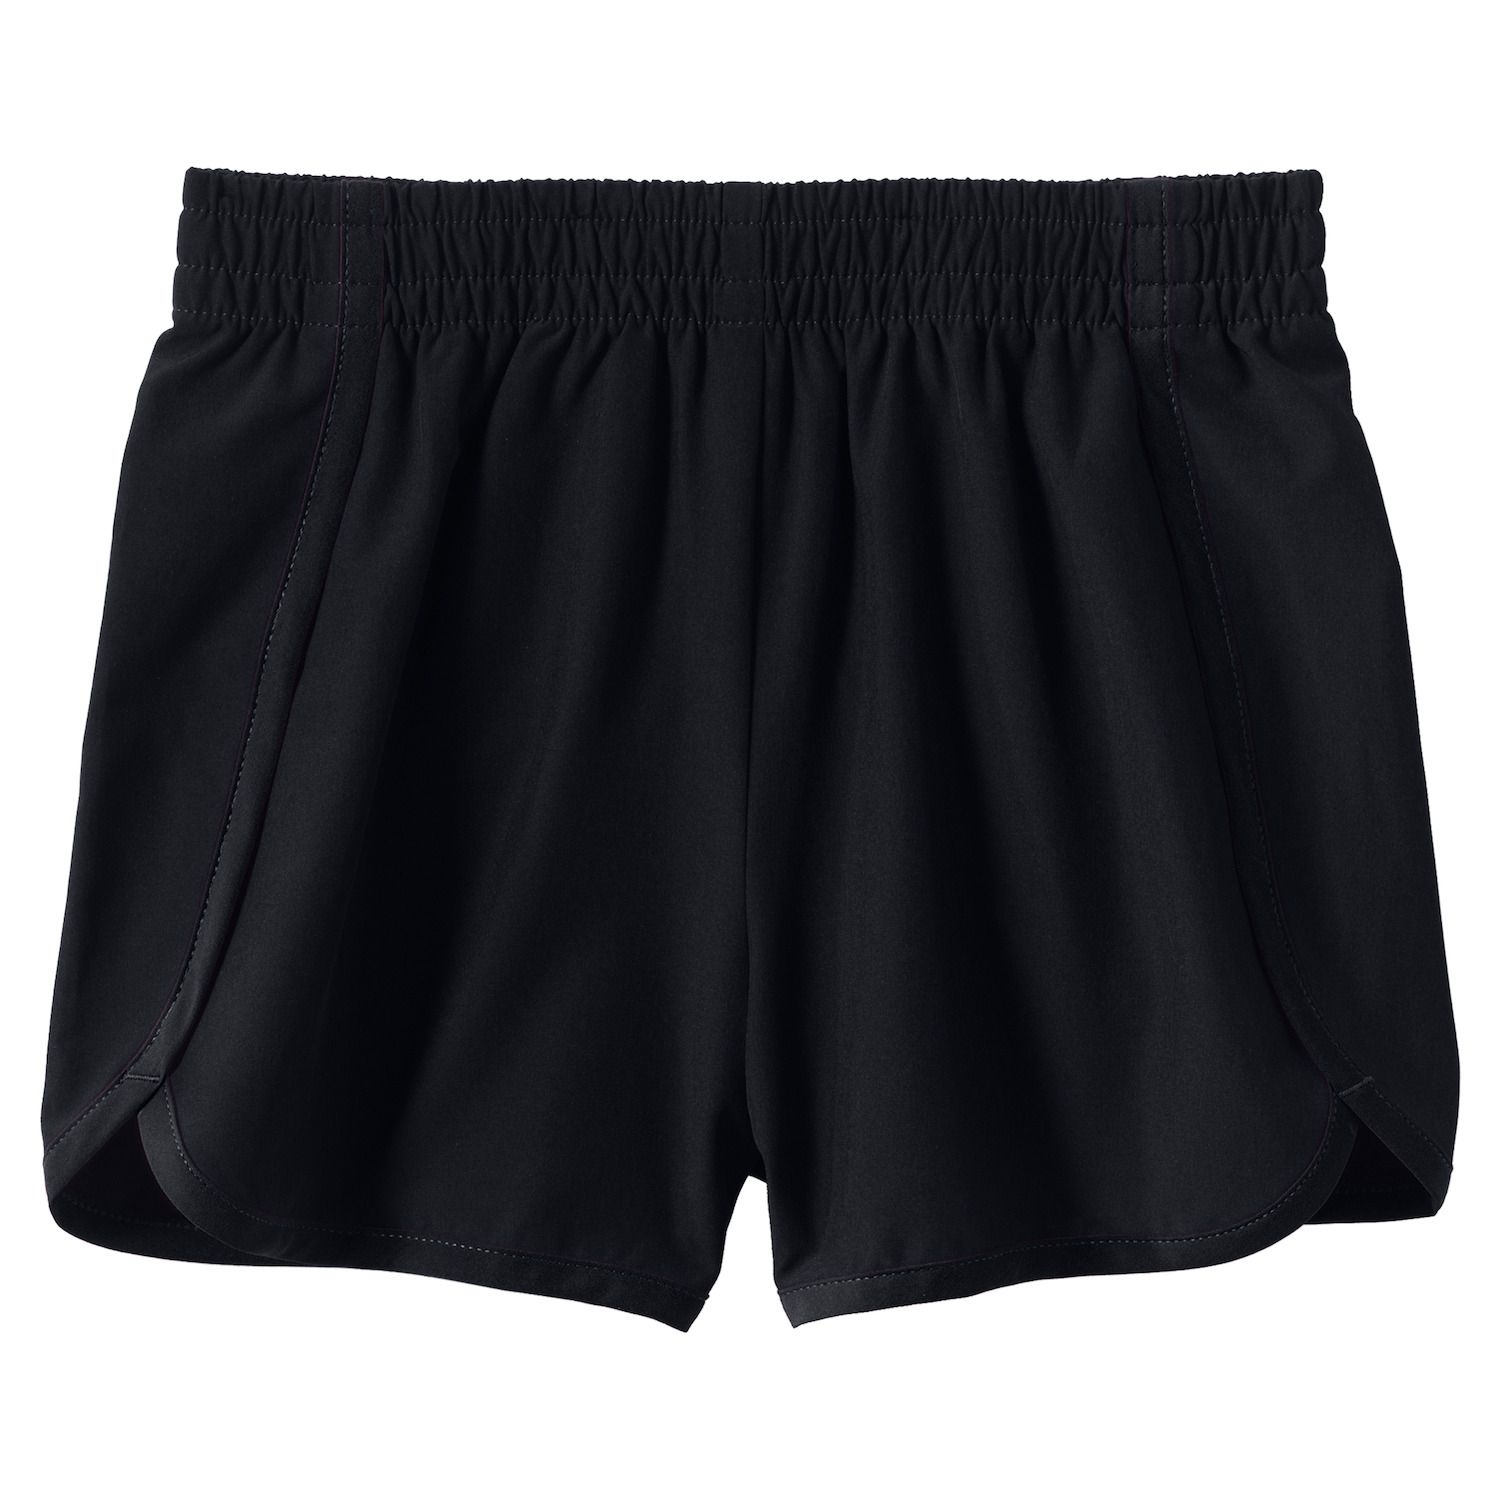 Image for Lands' End Girls 7-16 Athletic Side Pocket Active Shorts in Plus Size at Kohl's.